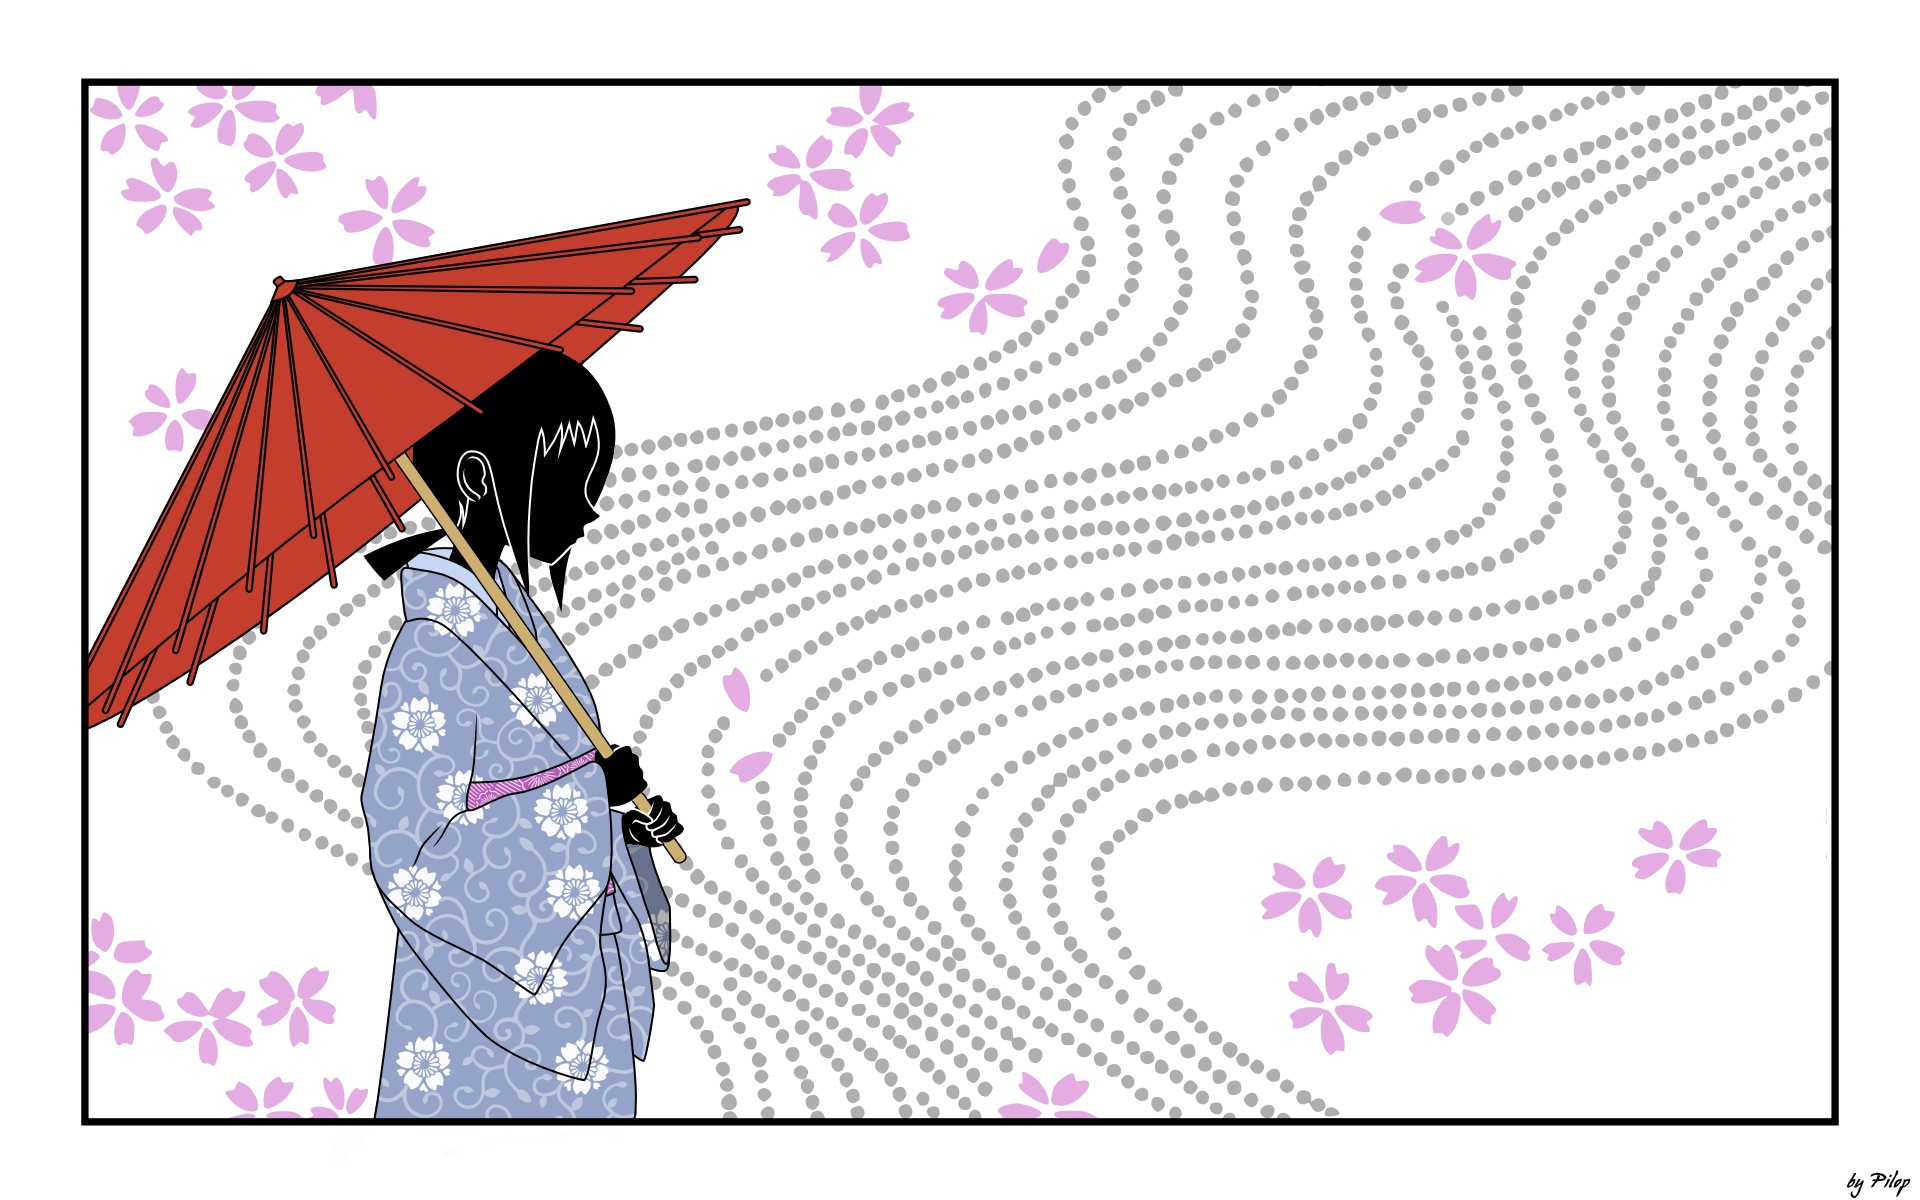 Anime character Ai Kaga from Sayonara Zetsubou-Sensei, featuring a colorful desktop wallpaper.